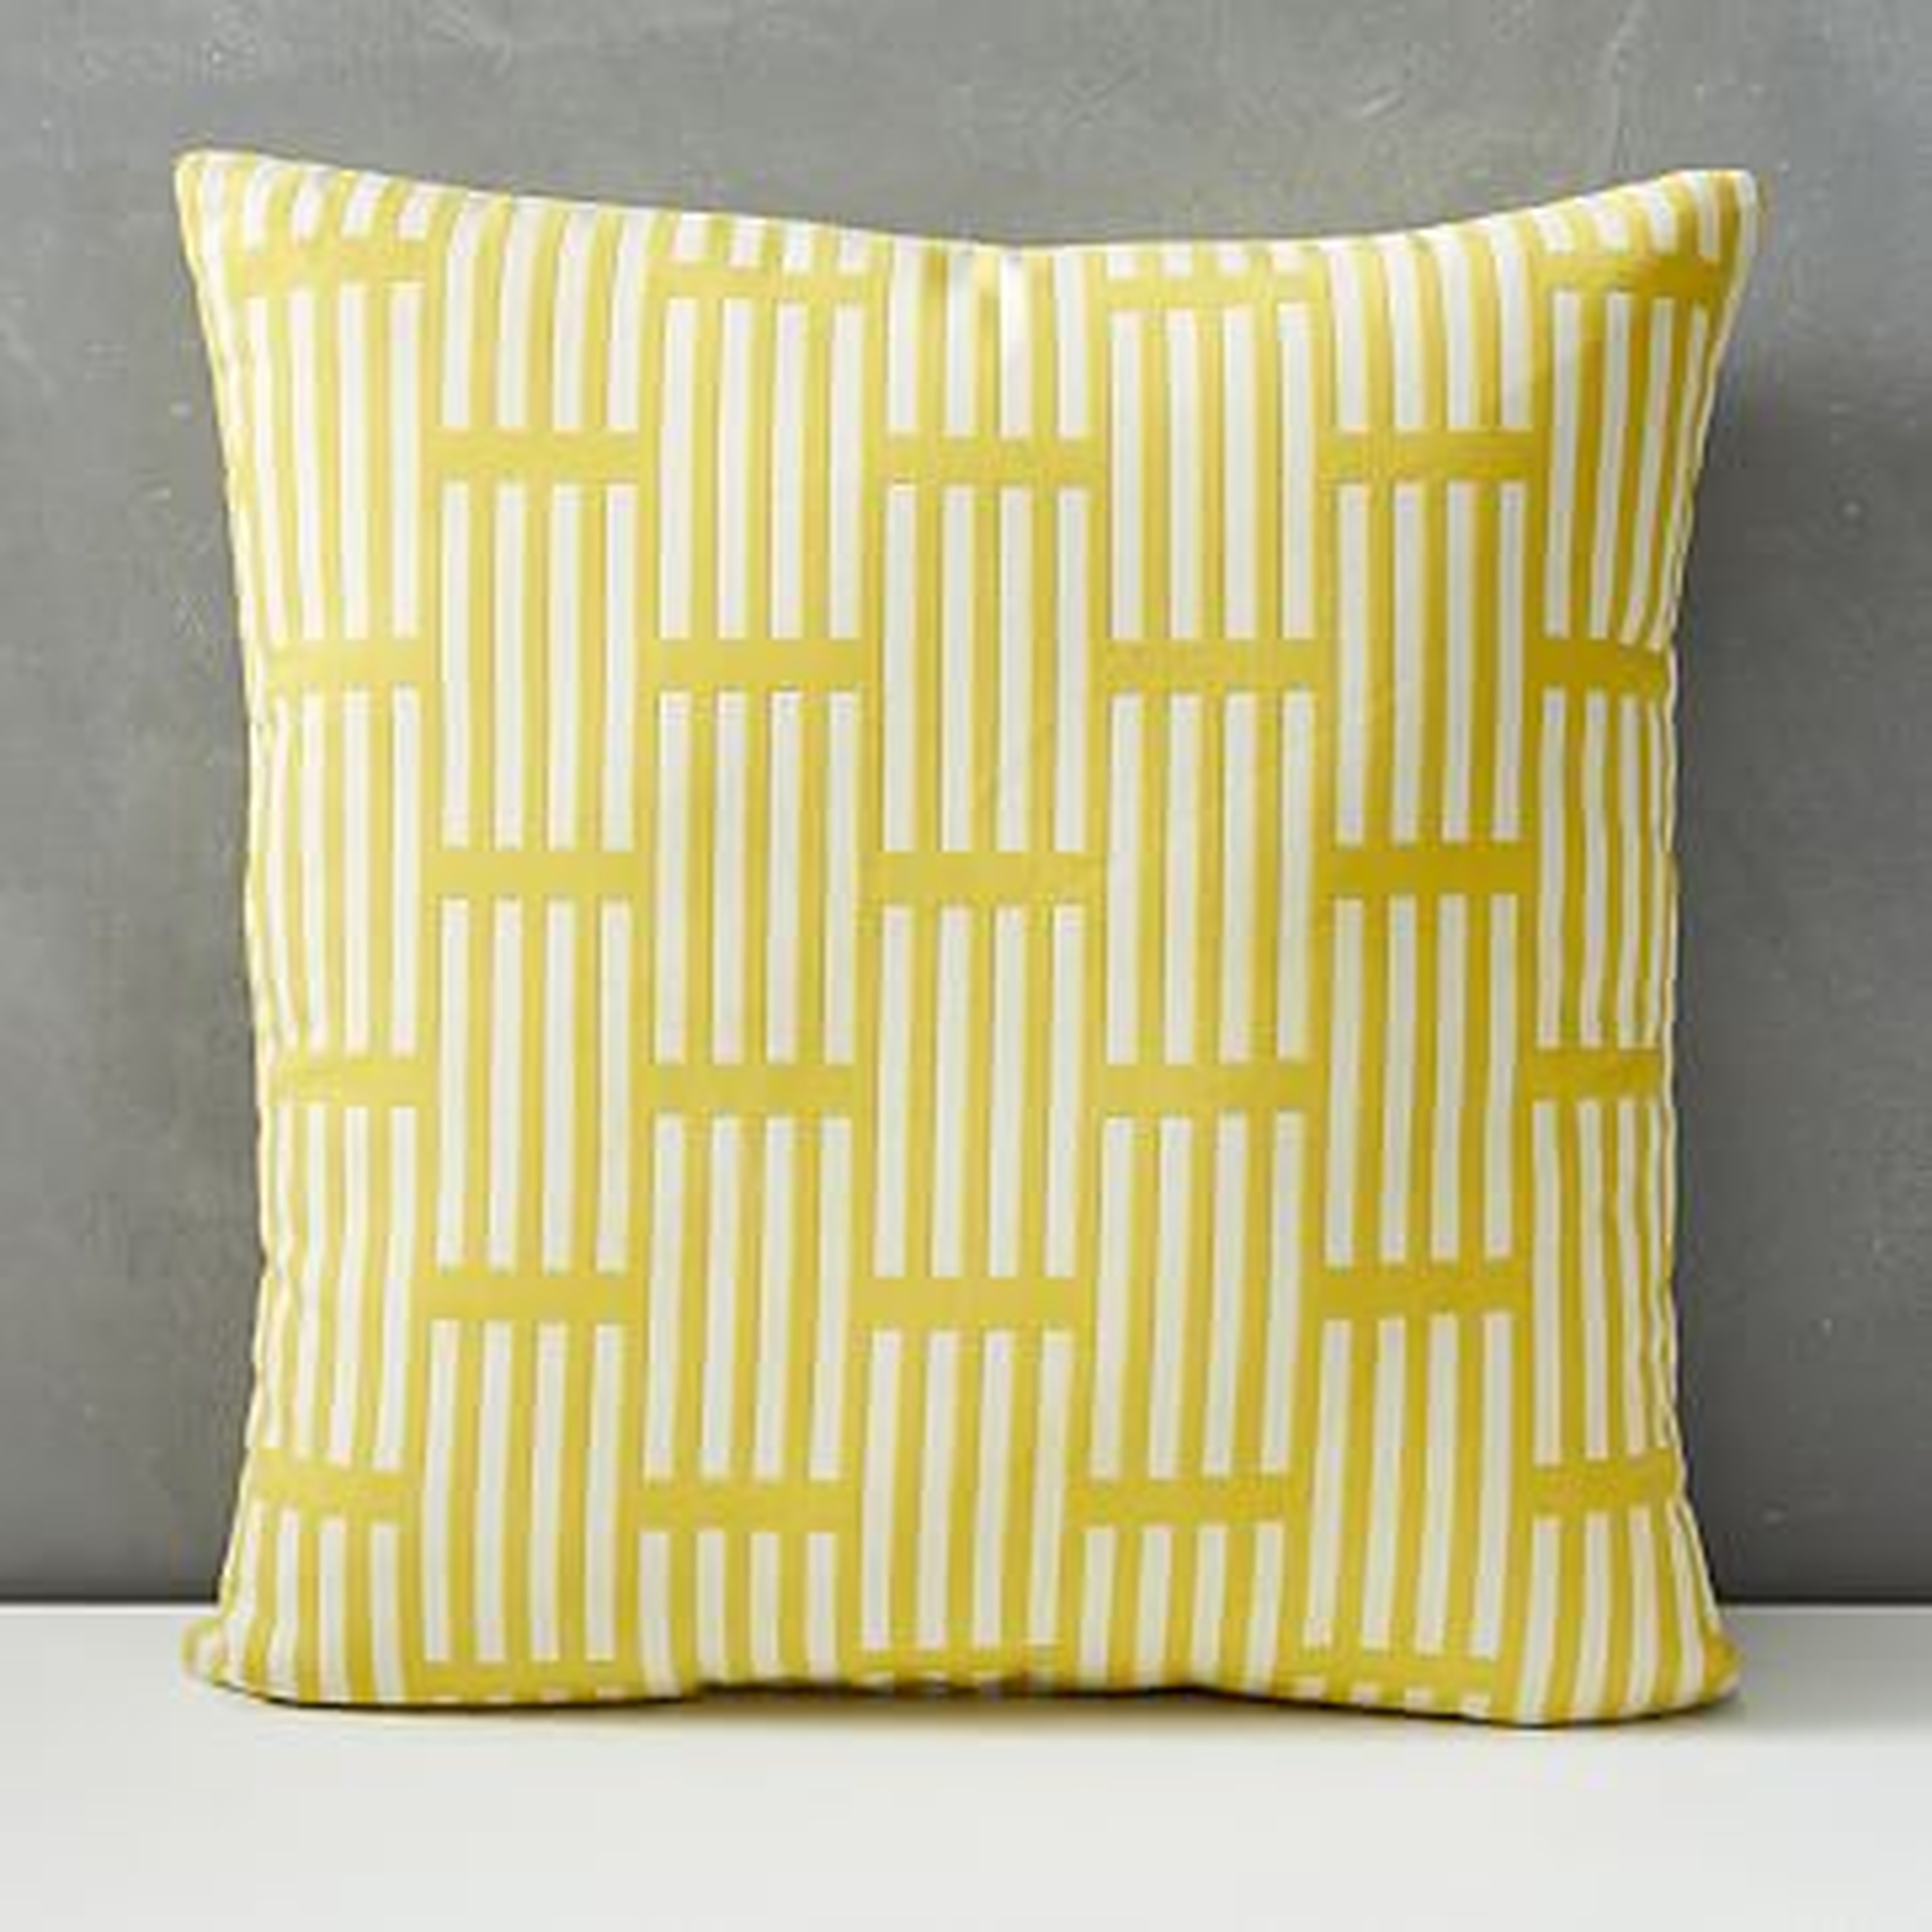 Outdoor Lattice Pillow, 18"x18", Citrus Yellow - West Elm